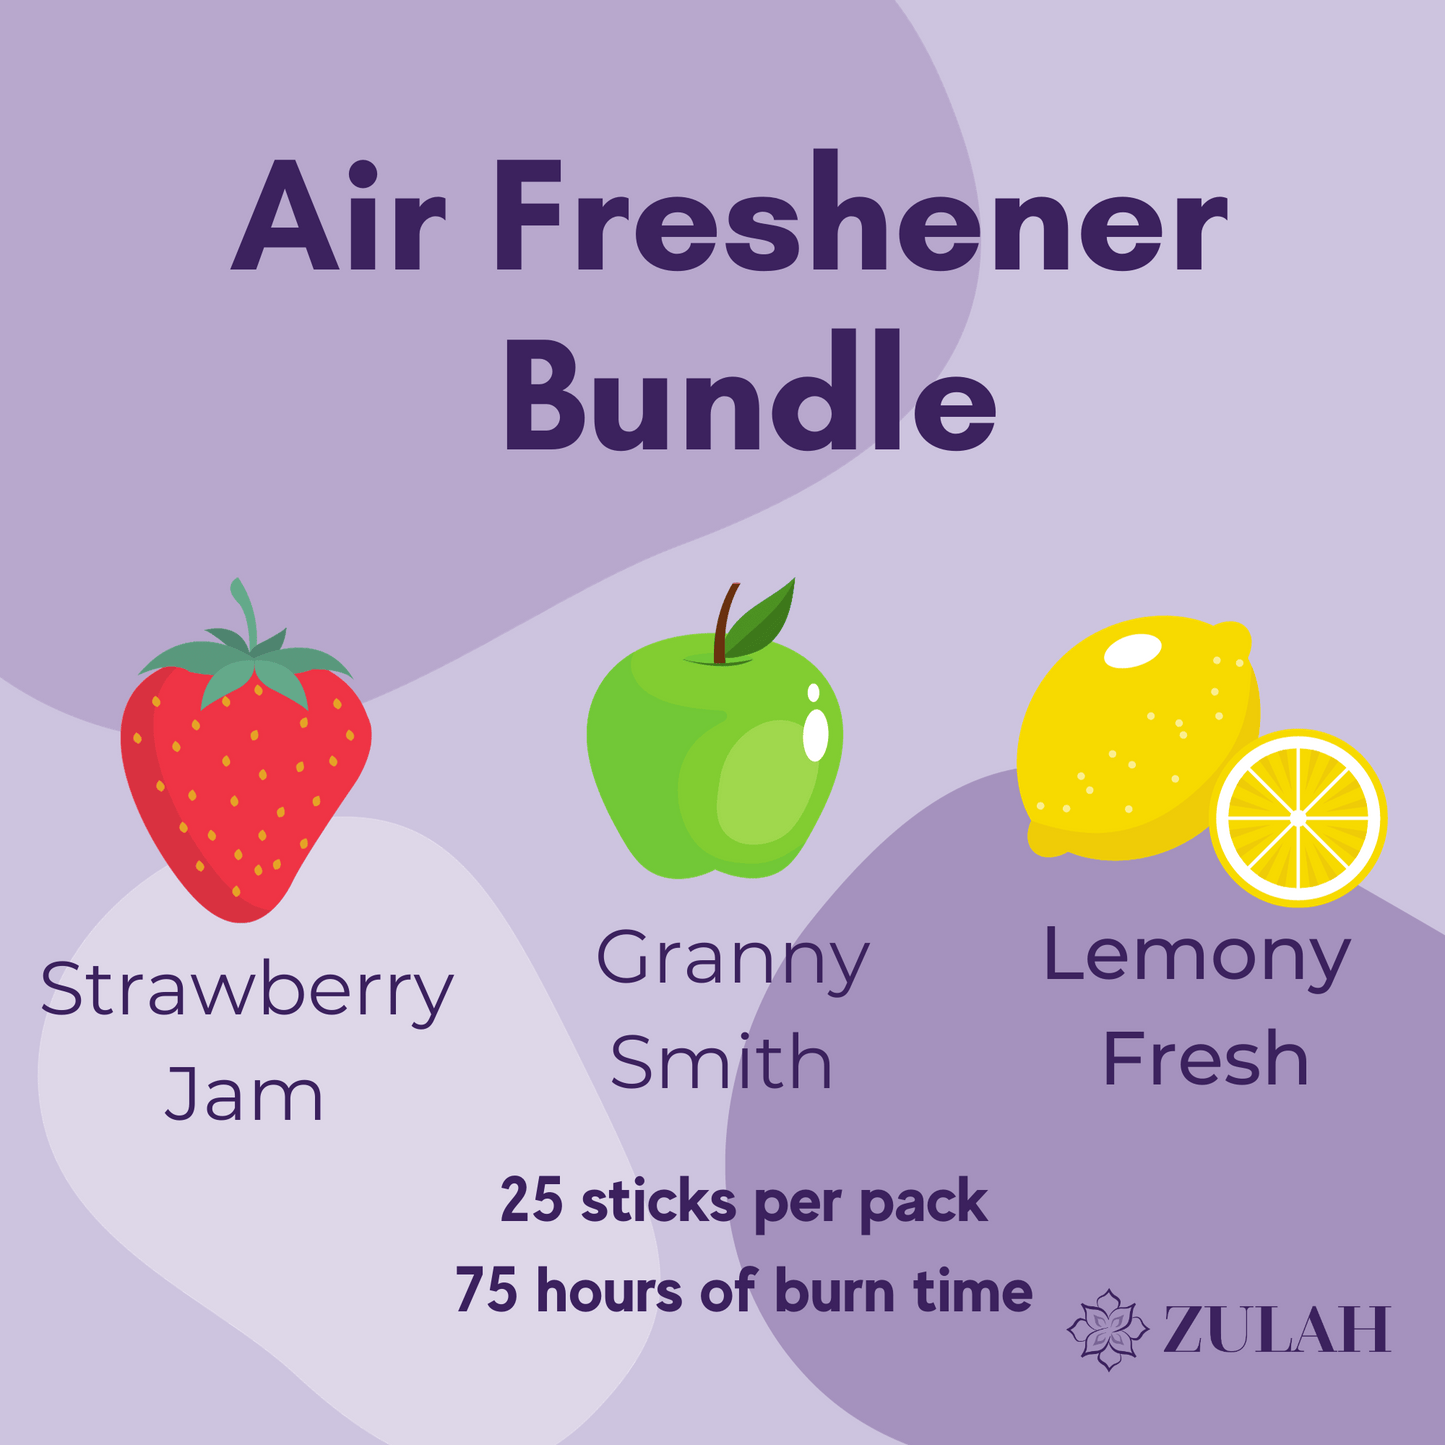 Air Freshener Incense Bundle - Strawberry Jam, Granny Smith, Lemony Fresh